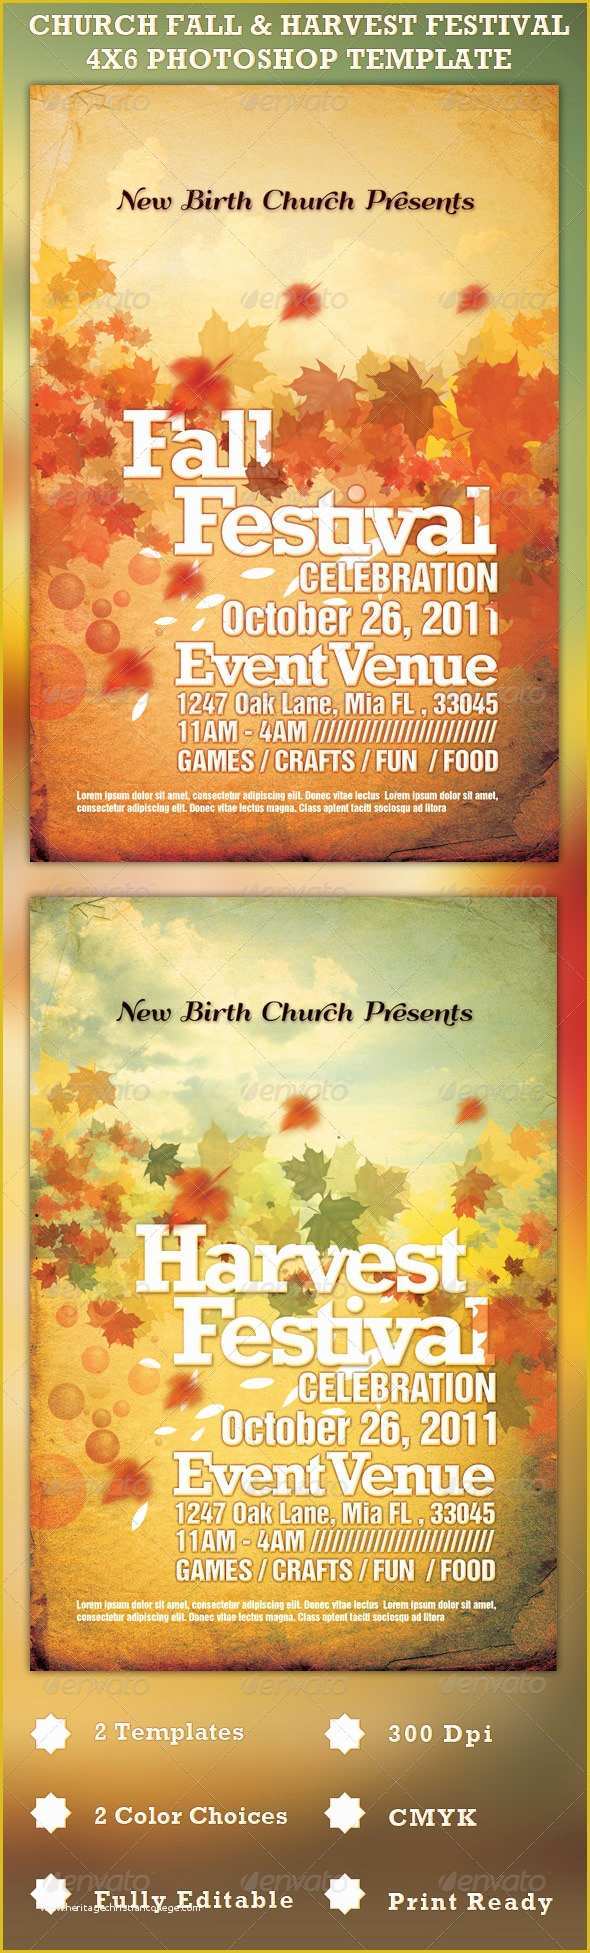 Harvest Festival Flyer Free Template Of Church Fall and Harvest Festival Template On Behance